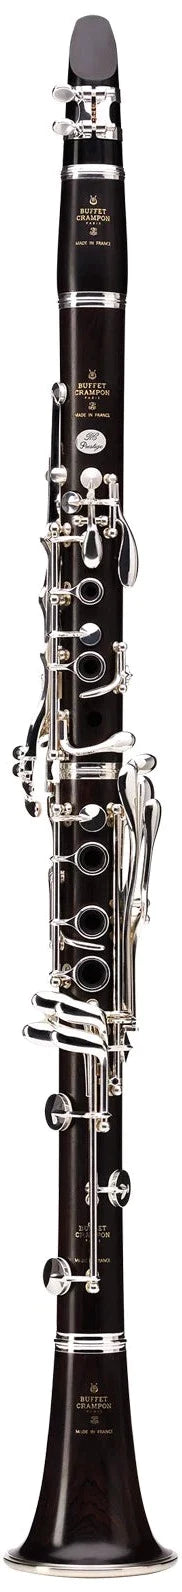 Buffet Crampon RC Prestige Series D Clarinet - Premium D Clarinet from Buffet Crampon - Just $10774! Shop now at Poppa's Music